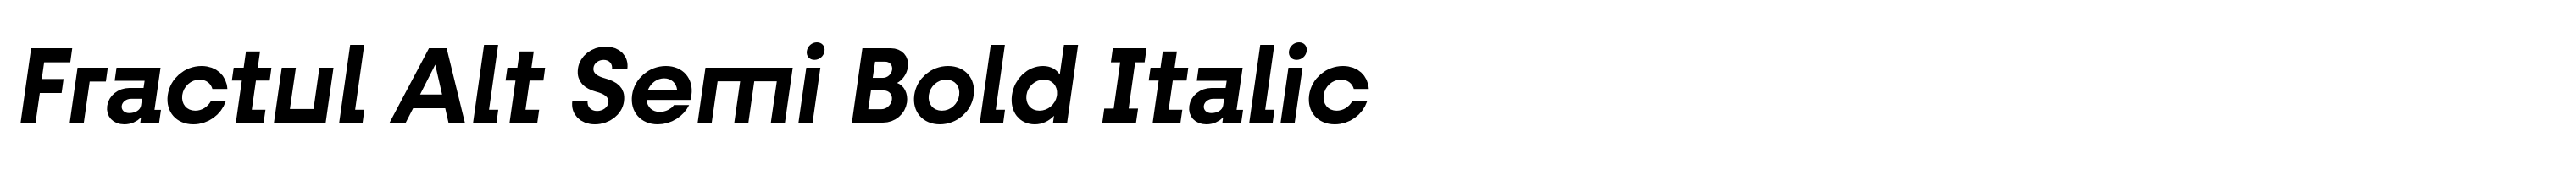 Fractul Alt Semi Bold Italic